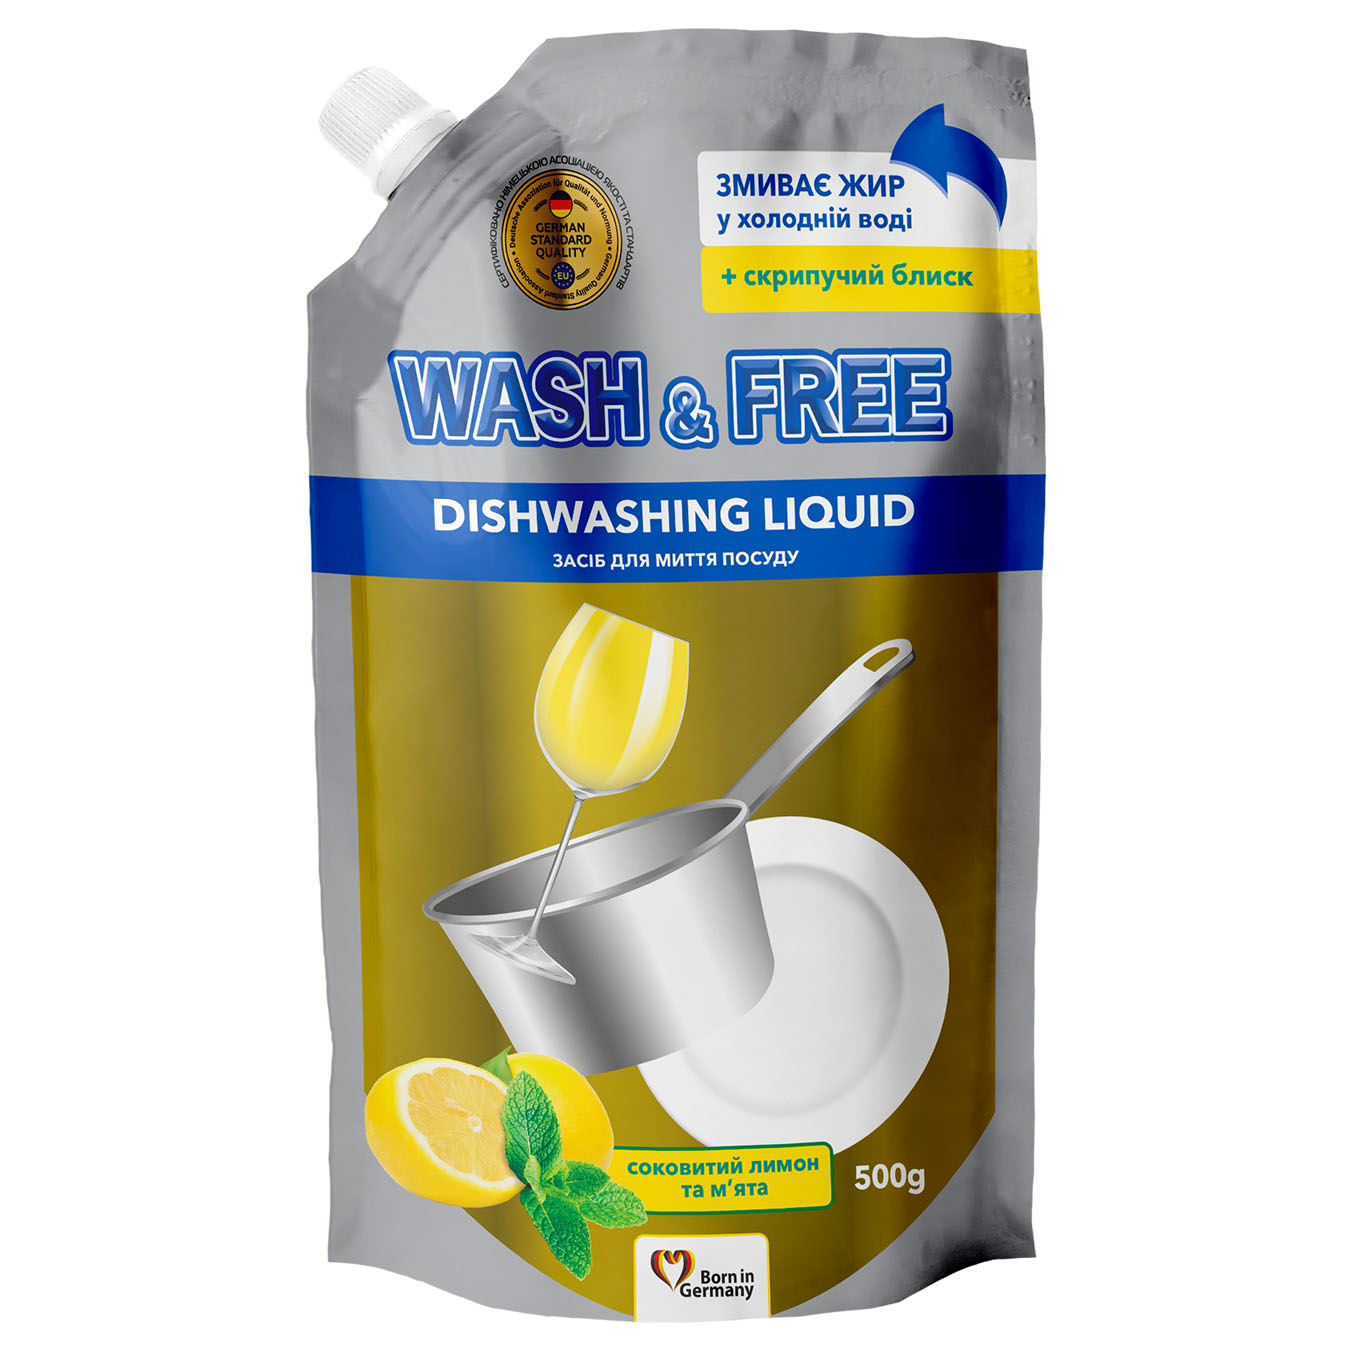 Dishwashing detergent Wash&Free lemon and mint 500g pack